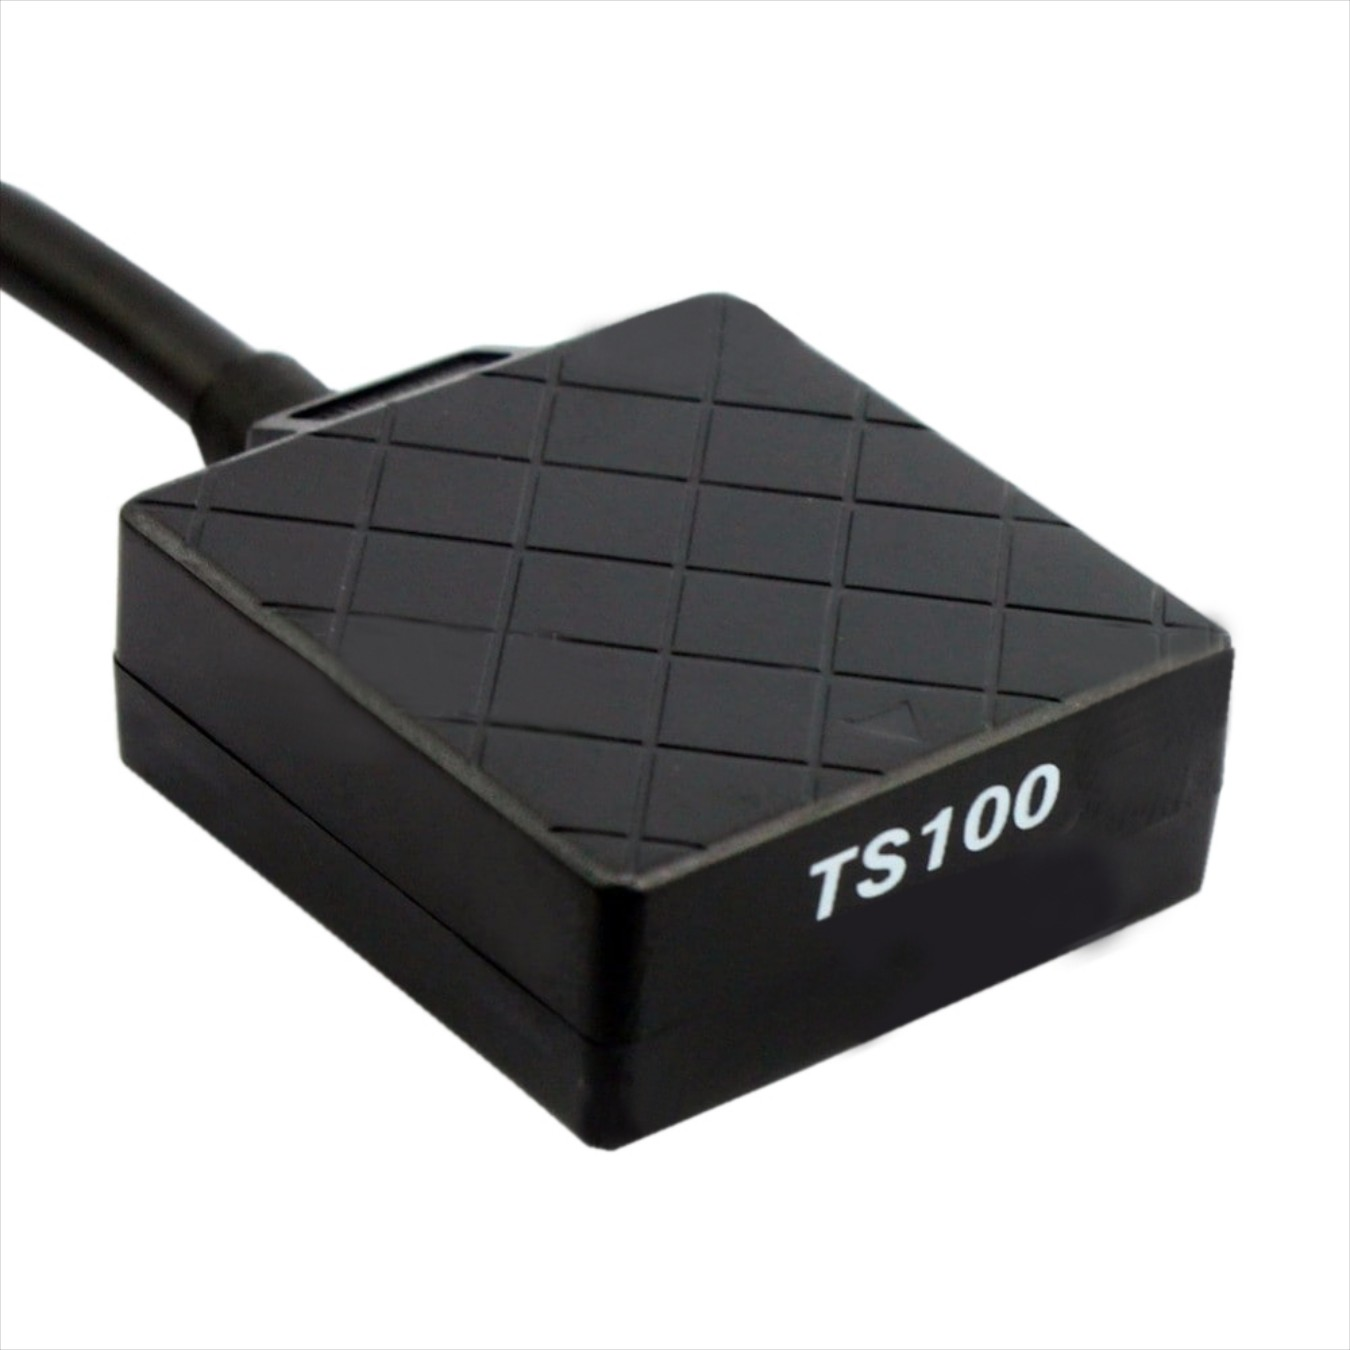 RADIOLINK TS100 MINI M8N GPS MODULE FOR CROSSFLIGHT & MINIPIX